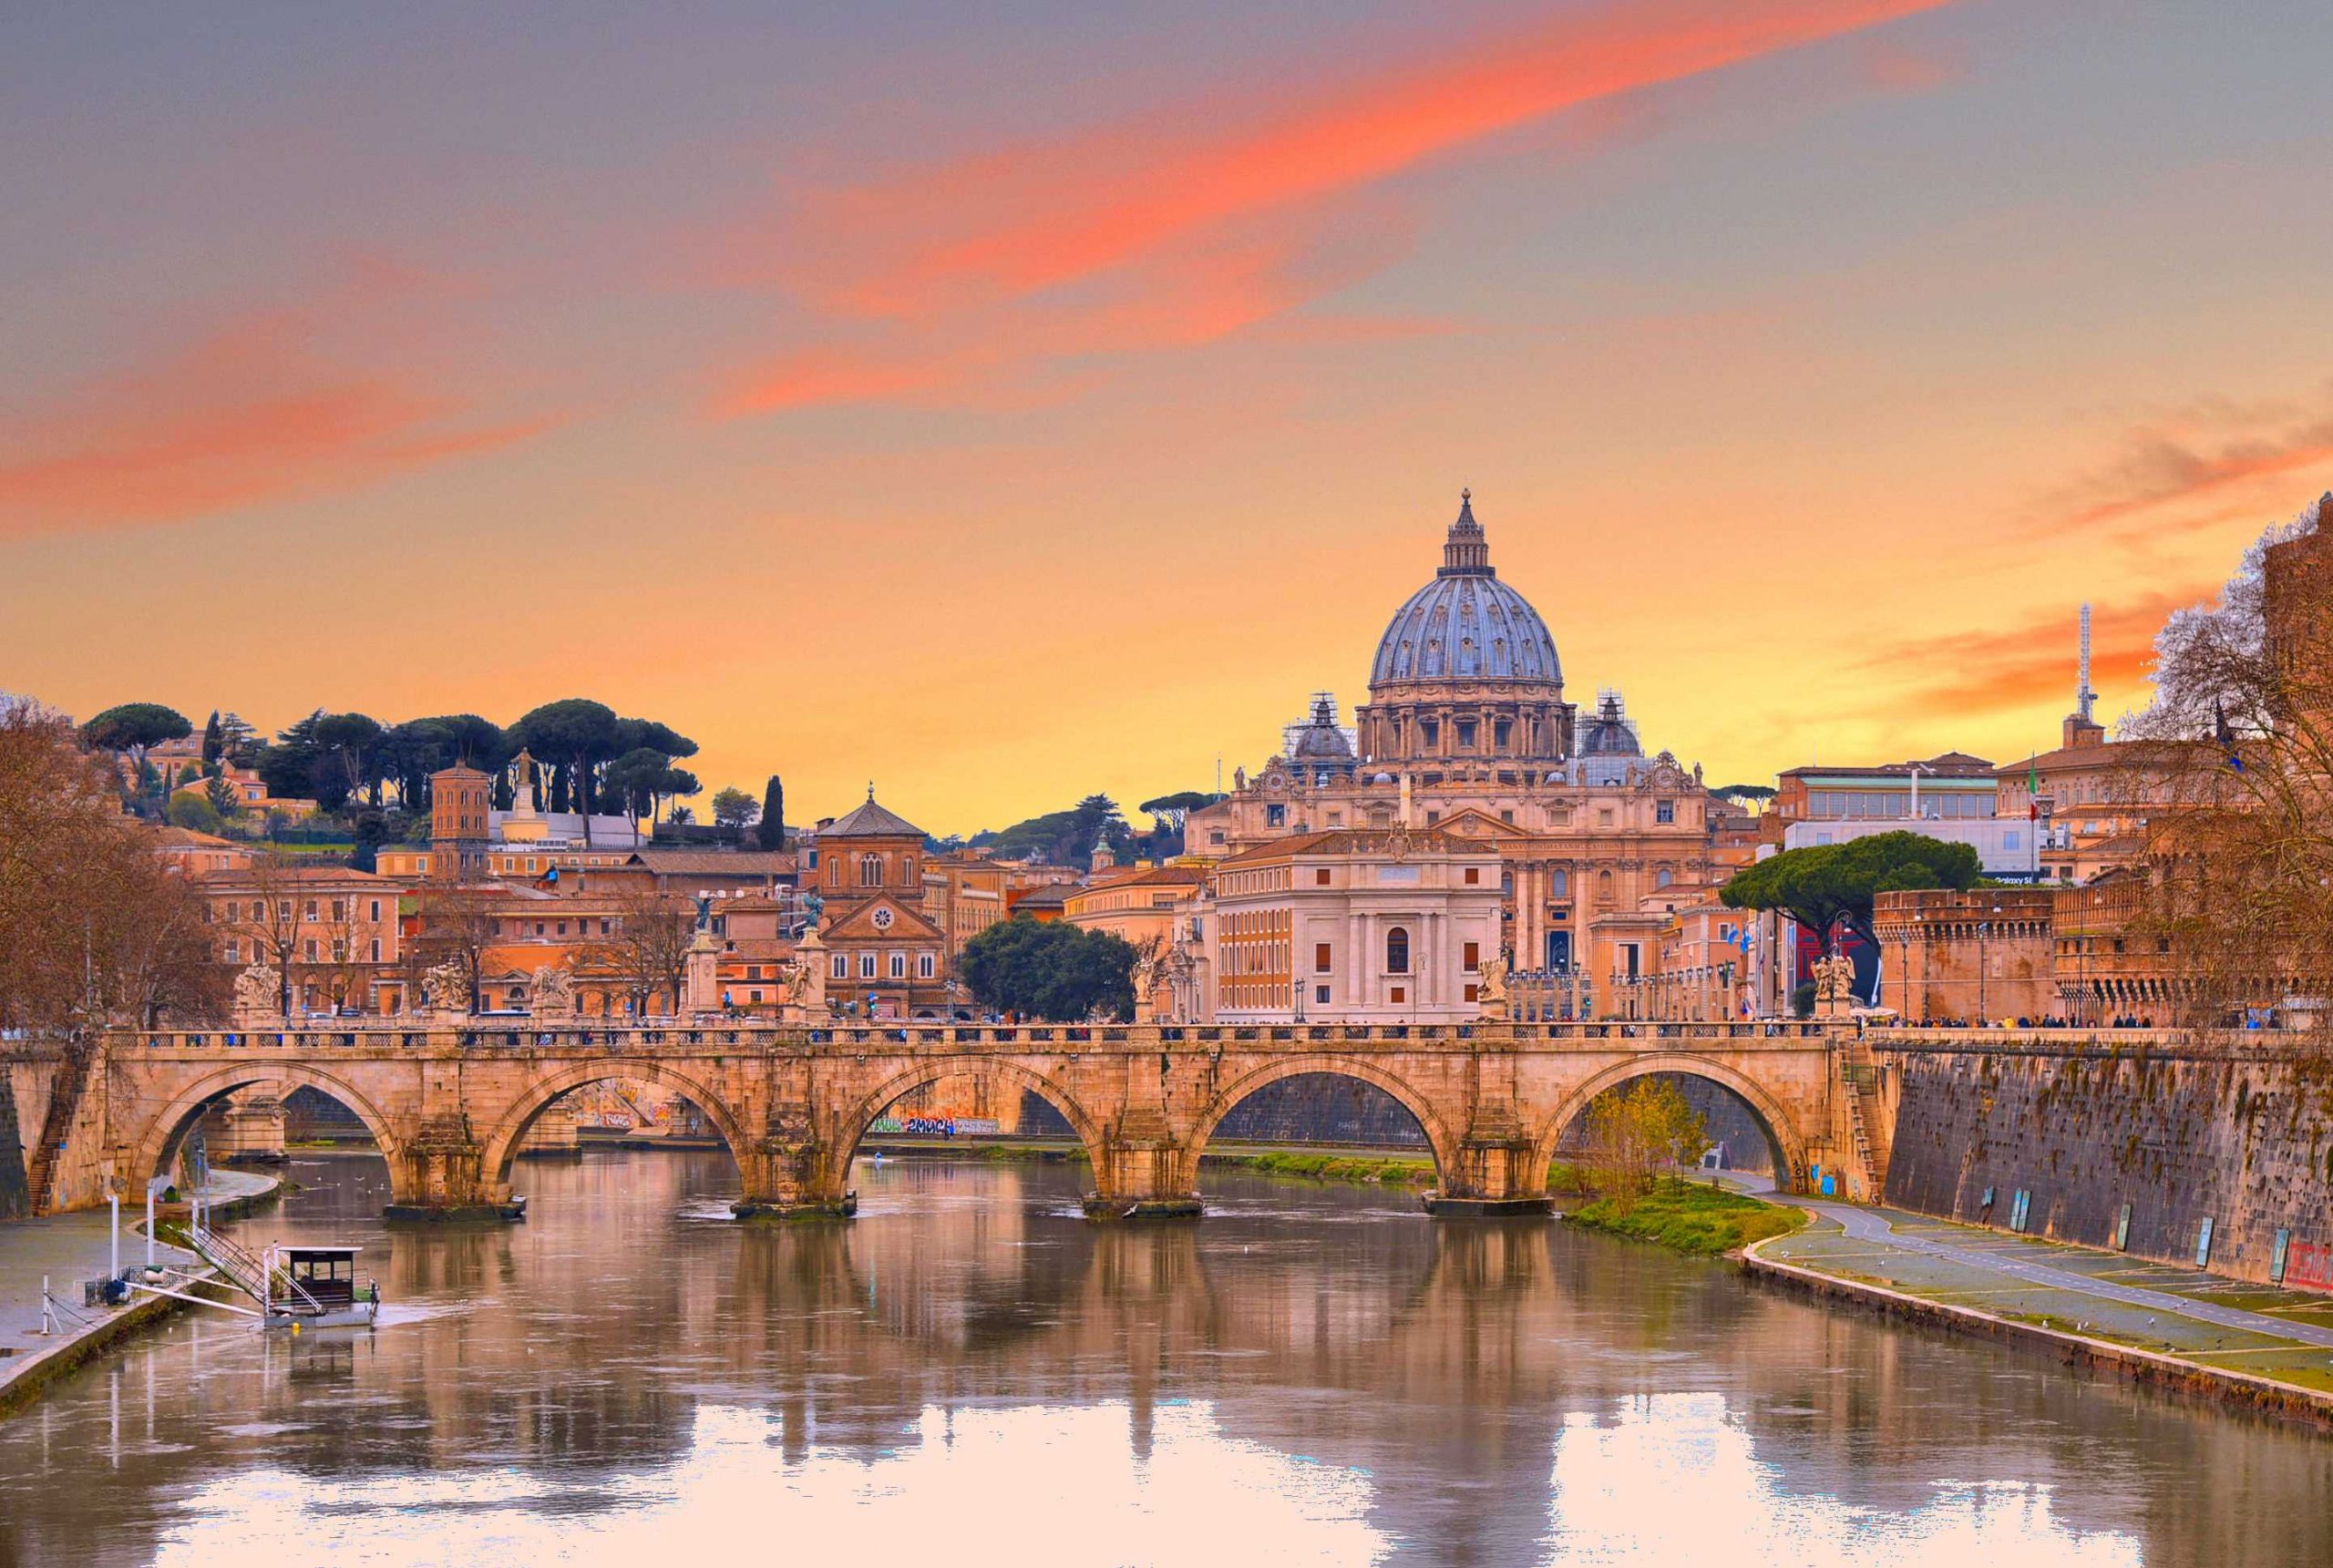 Eurail Trip in Rome as part of Best of Italy 1 week package